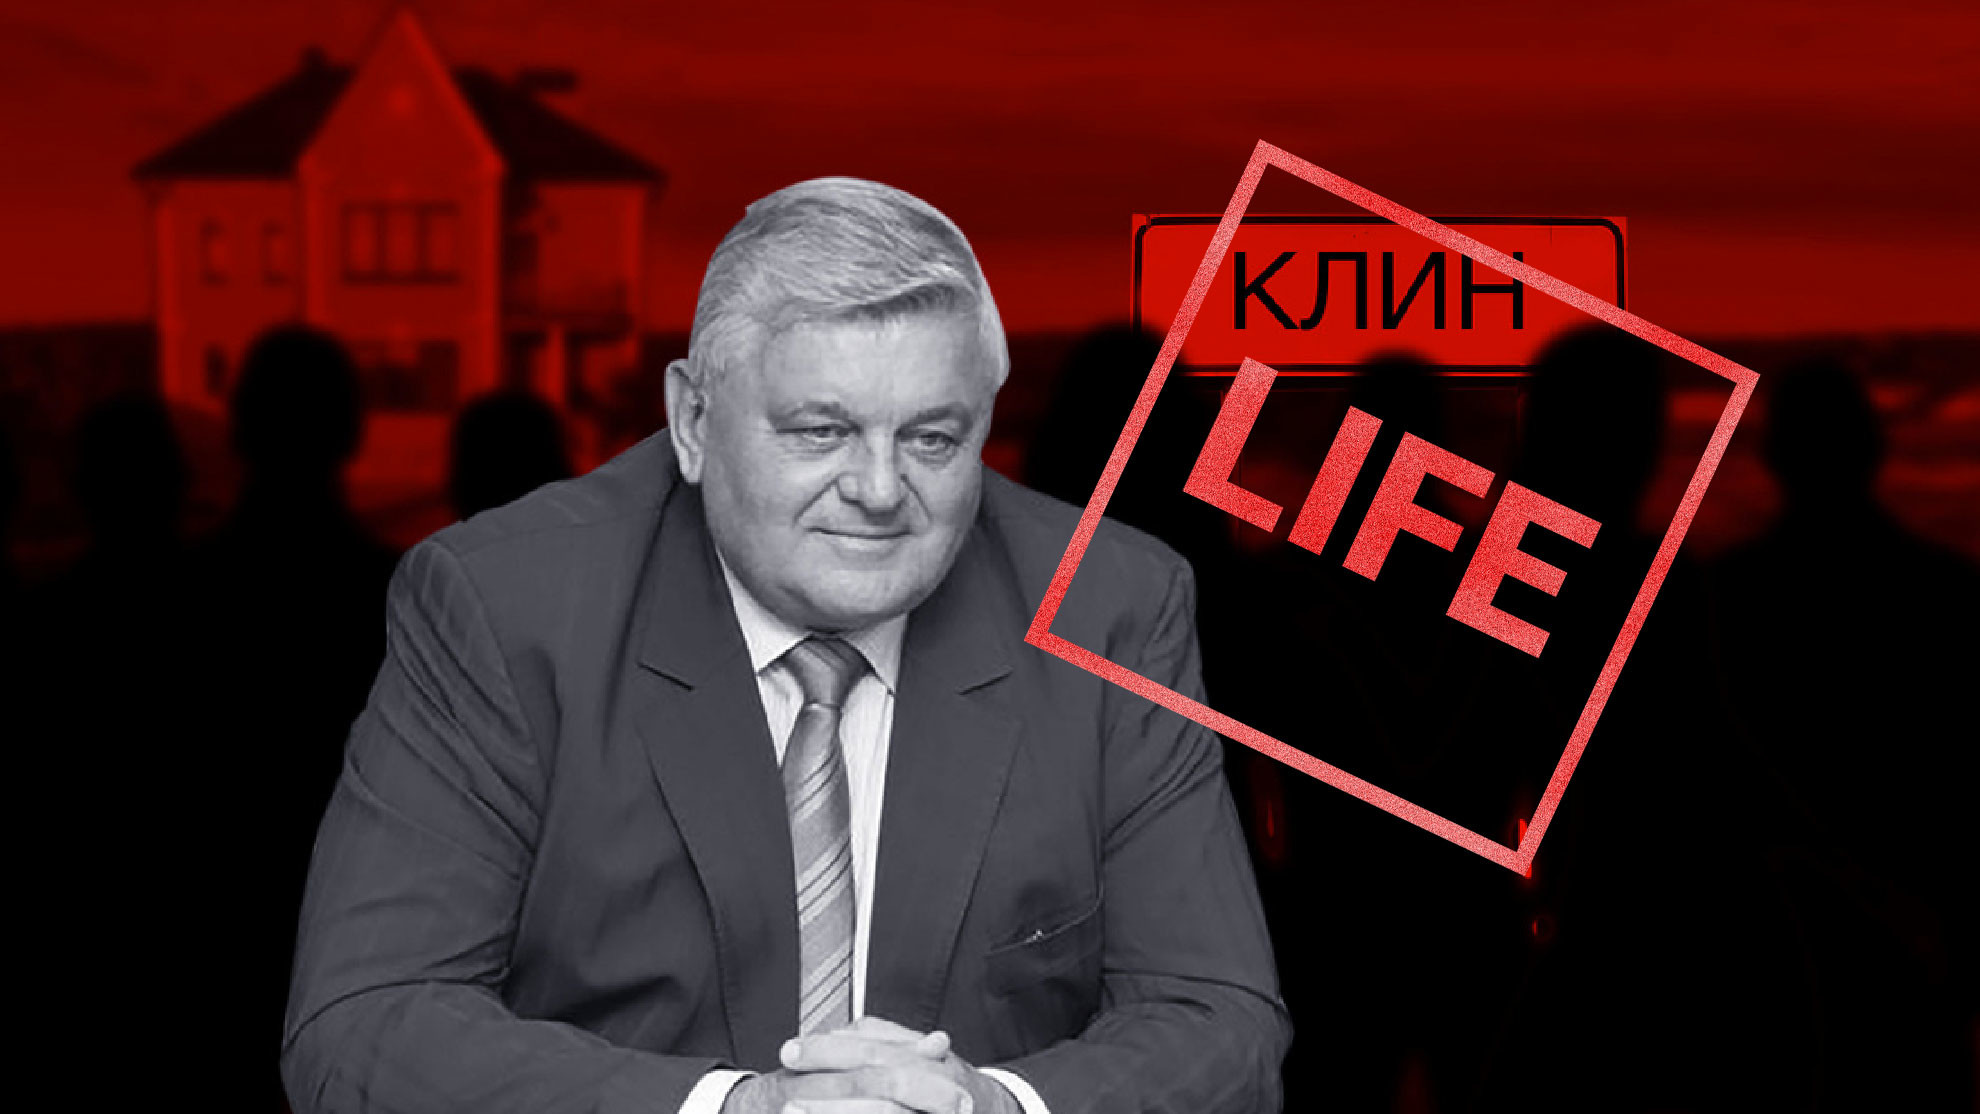 9 млрд рублей изъяли у клинского мэра после расследования Лайфа